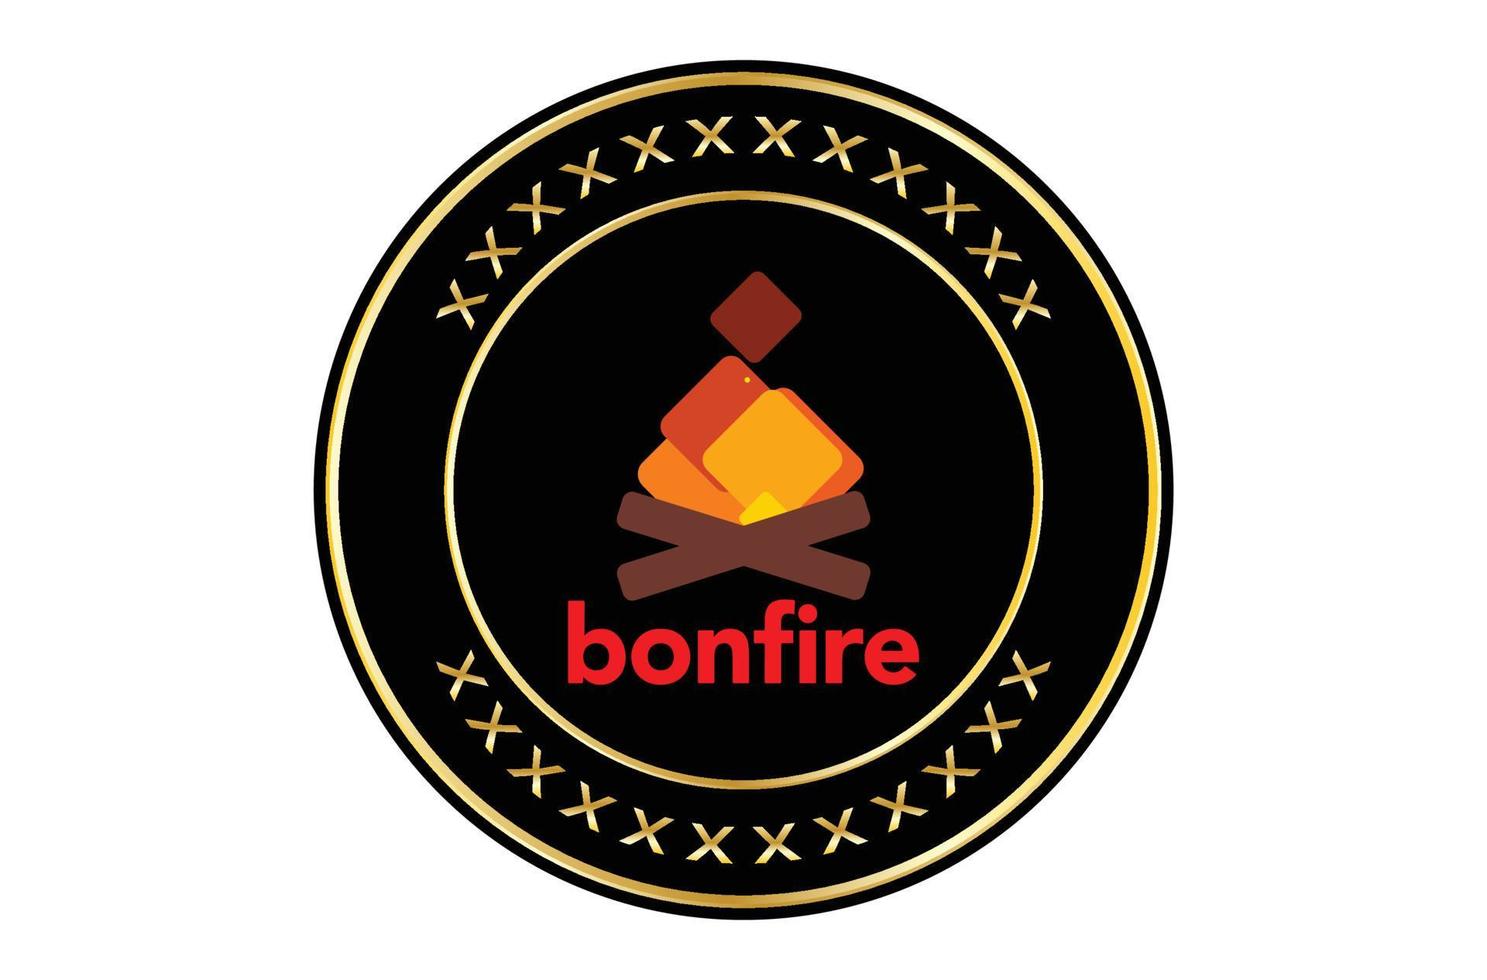 Bonfire logo crypto token with red and black colour vector